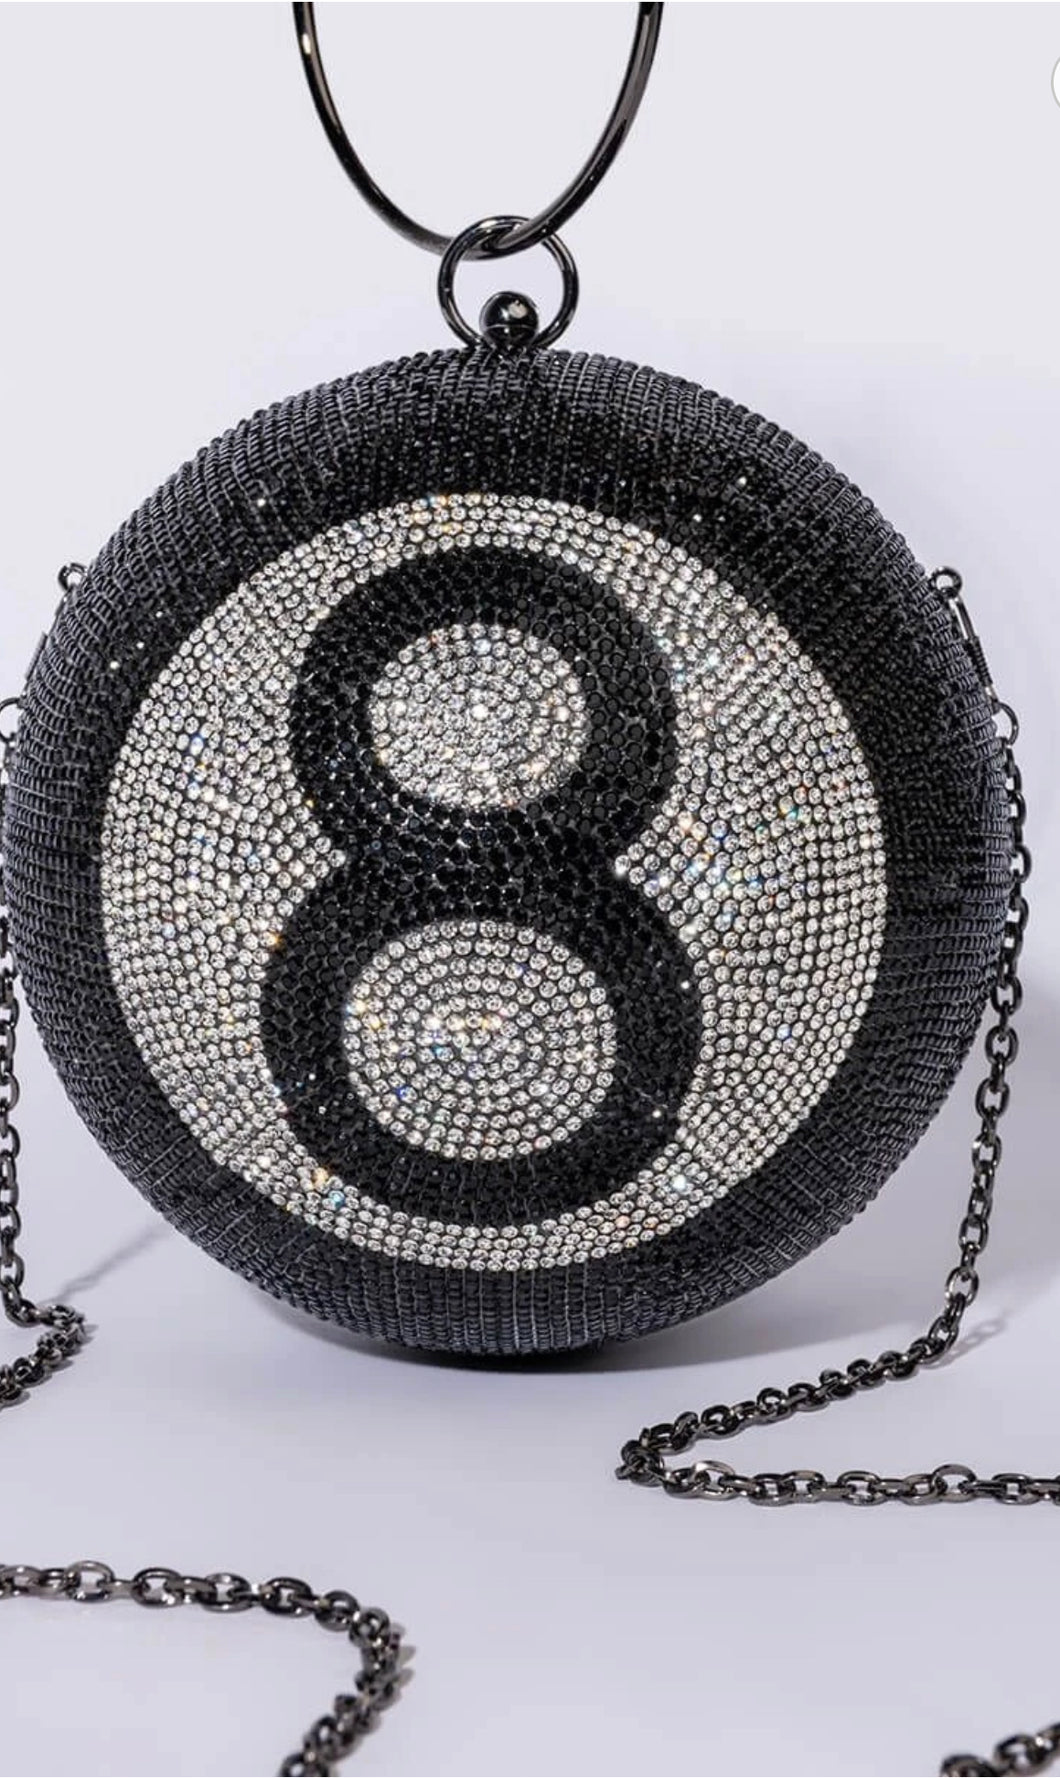 The 8 Ball Diva Bag